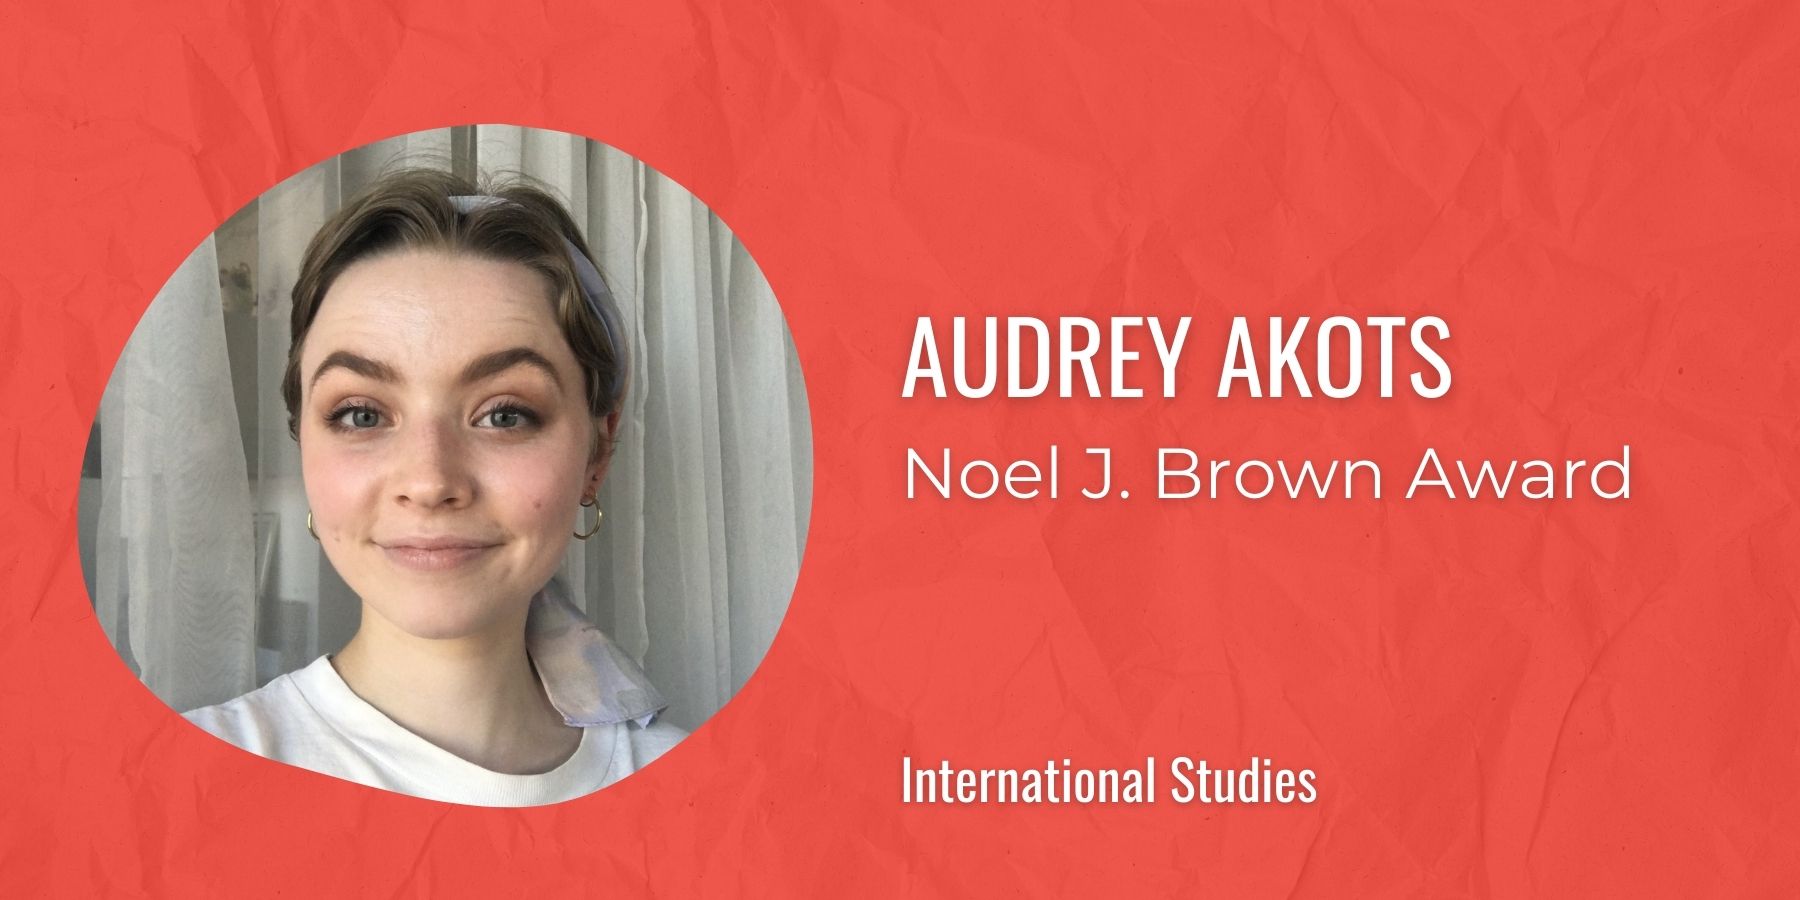 Image of Audrey Akots with text: Noel J. Brown Award, International Studies
